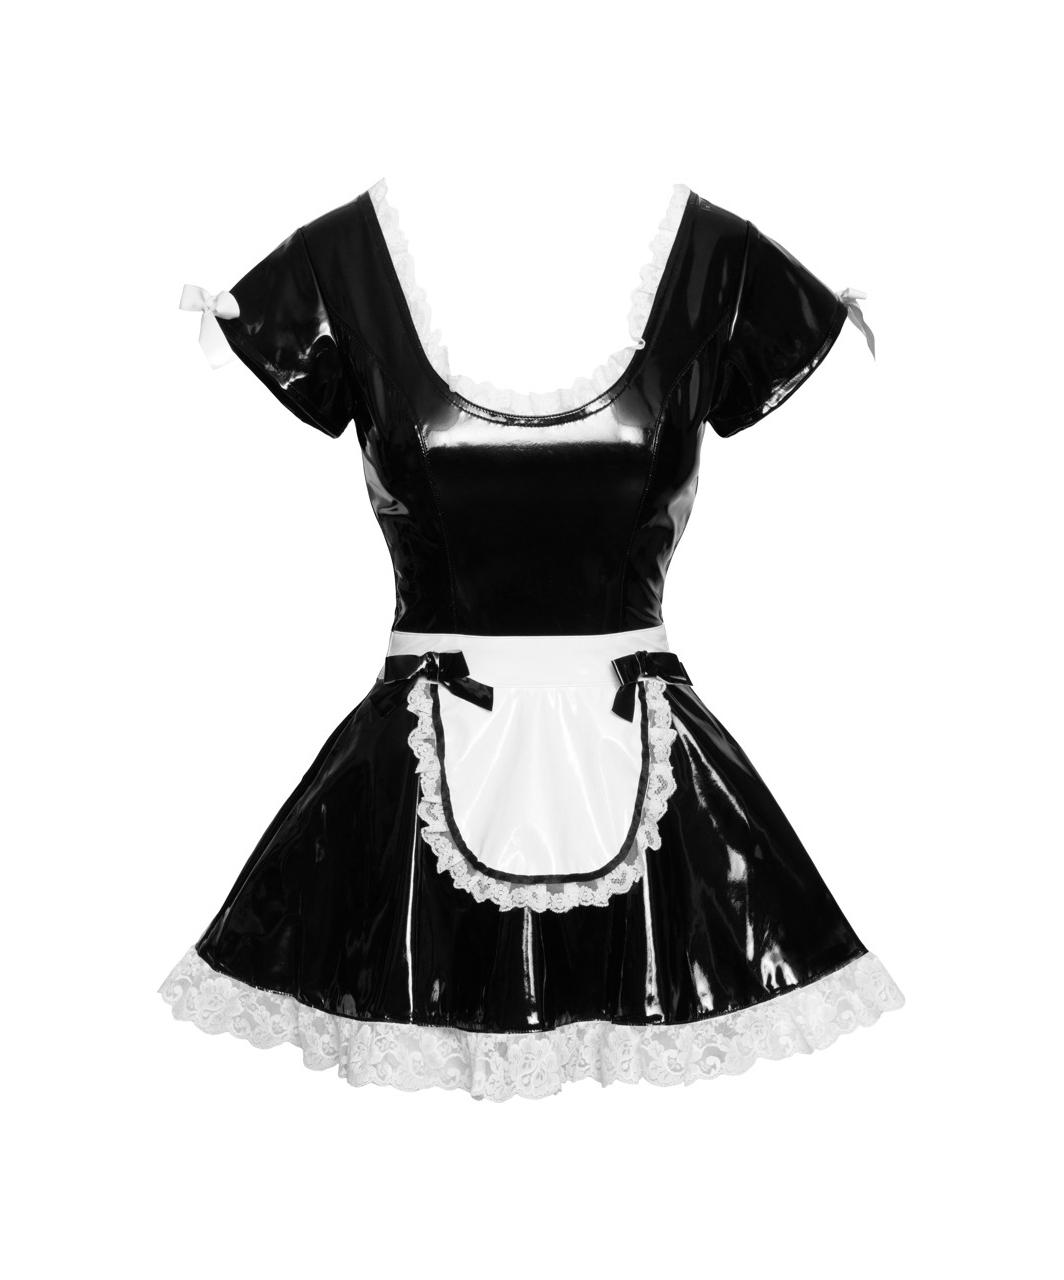 Black Level maid's vinyl dress